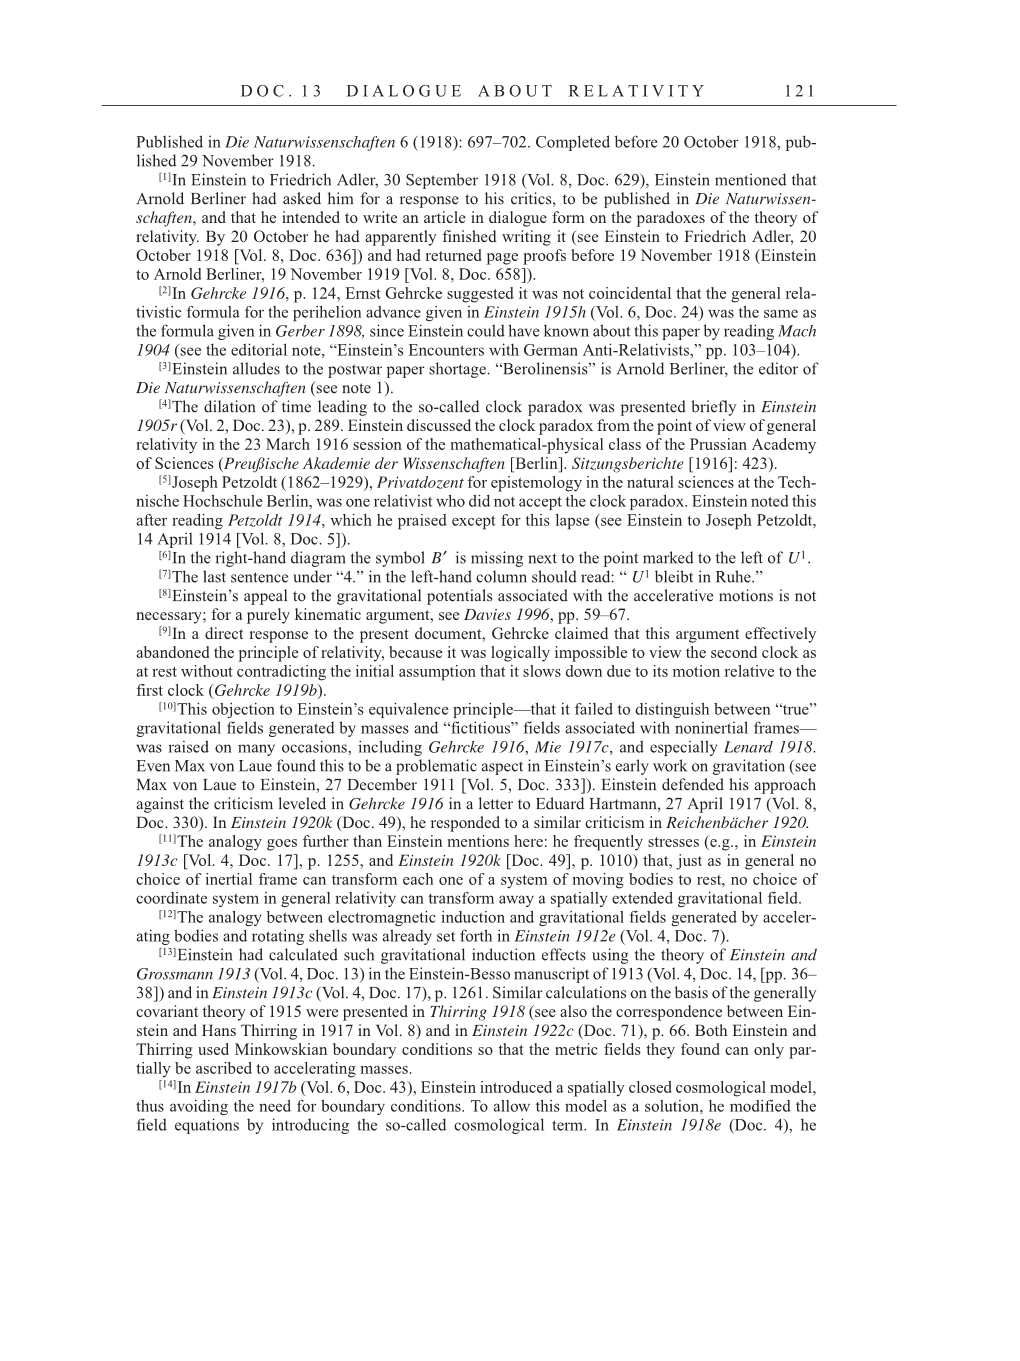 Volume 7: The Berlin Years: Writings, 1918-1921 page 121